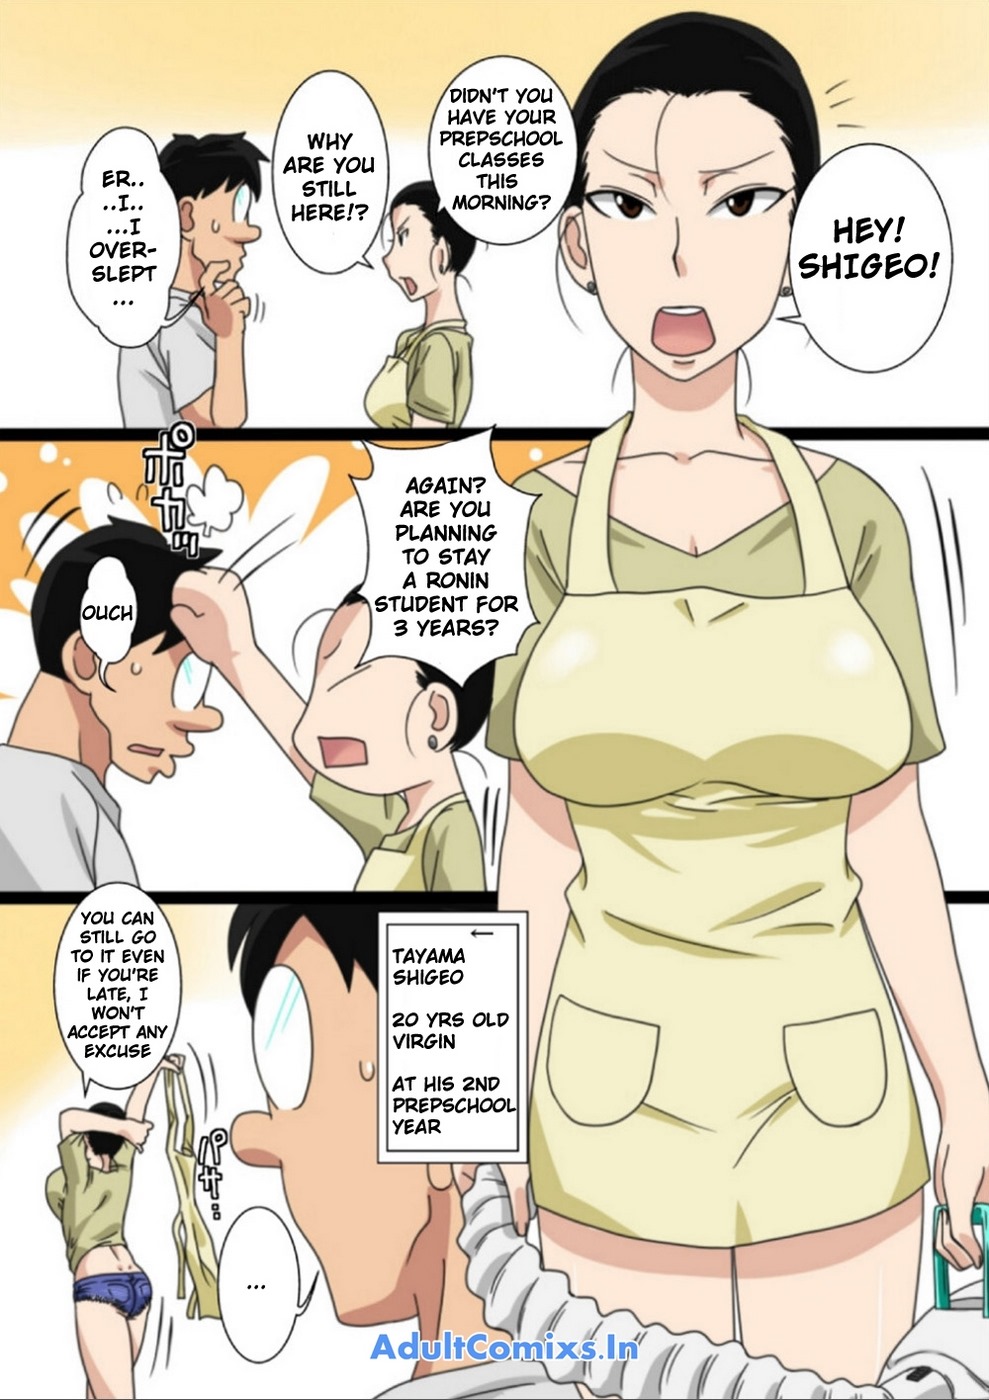 Shin Mama Wo Netoruze 1 Freehand Tamashii 8muses Hentai Manga 8 Muses Ics